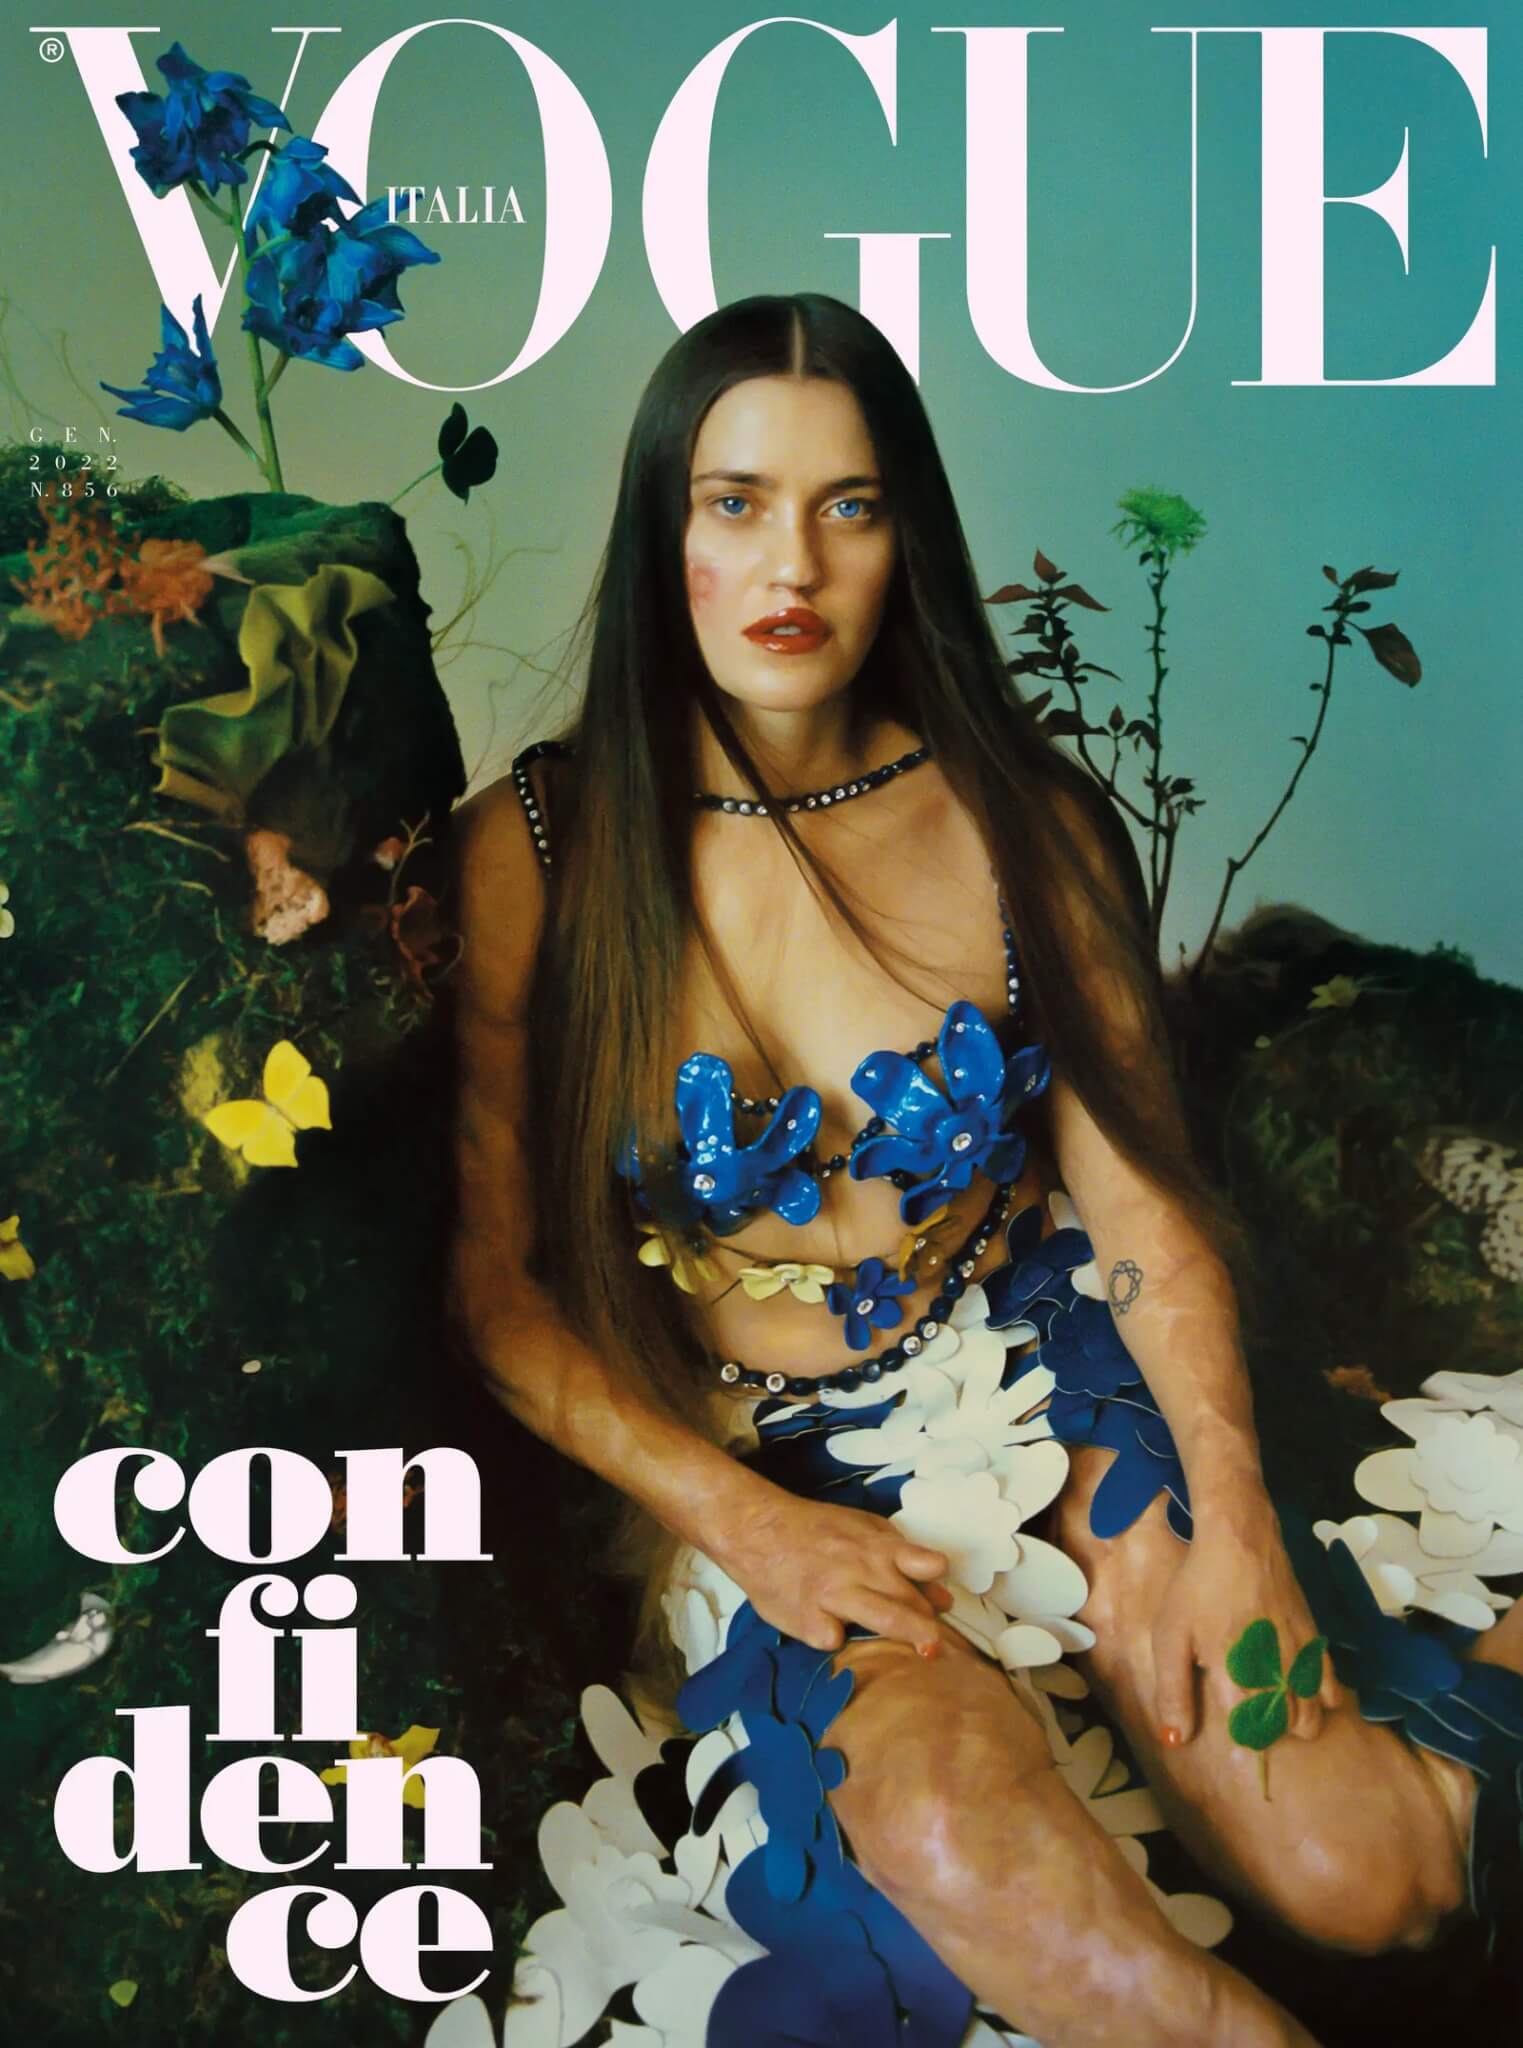 Veronica Yoko Plebani, l'atleta paralimpica sulla cover di Vogue Italia - Veronica Yoko Plebani - Gay.it